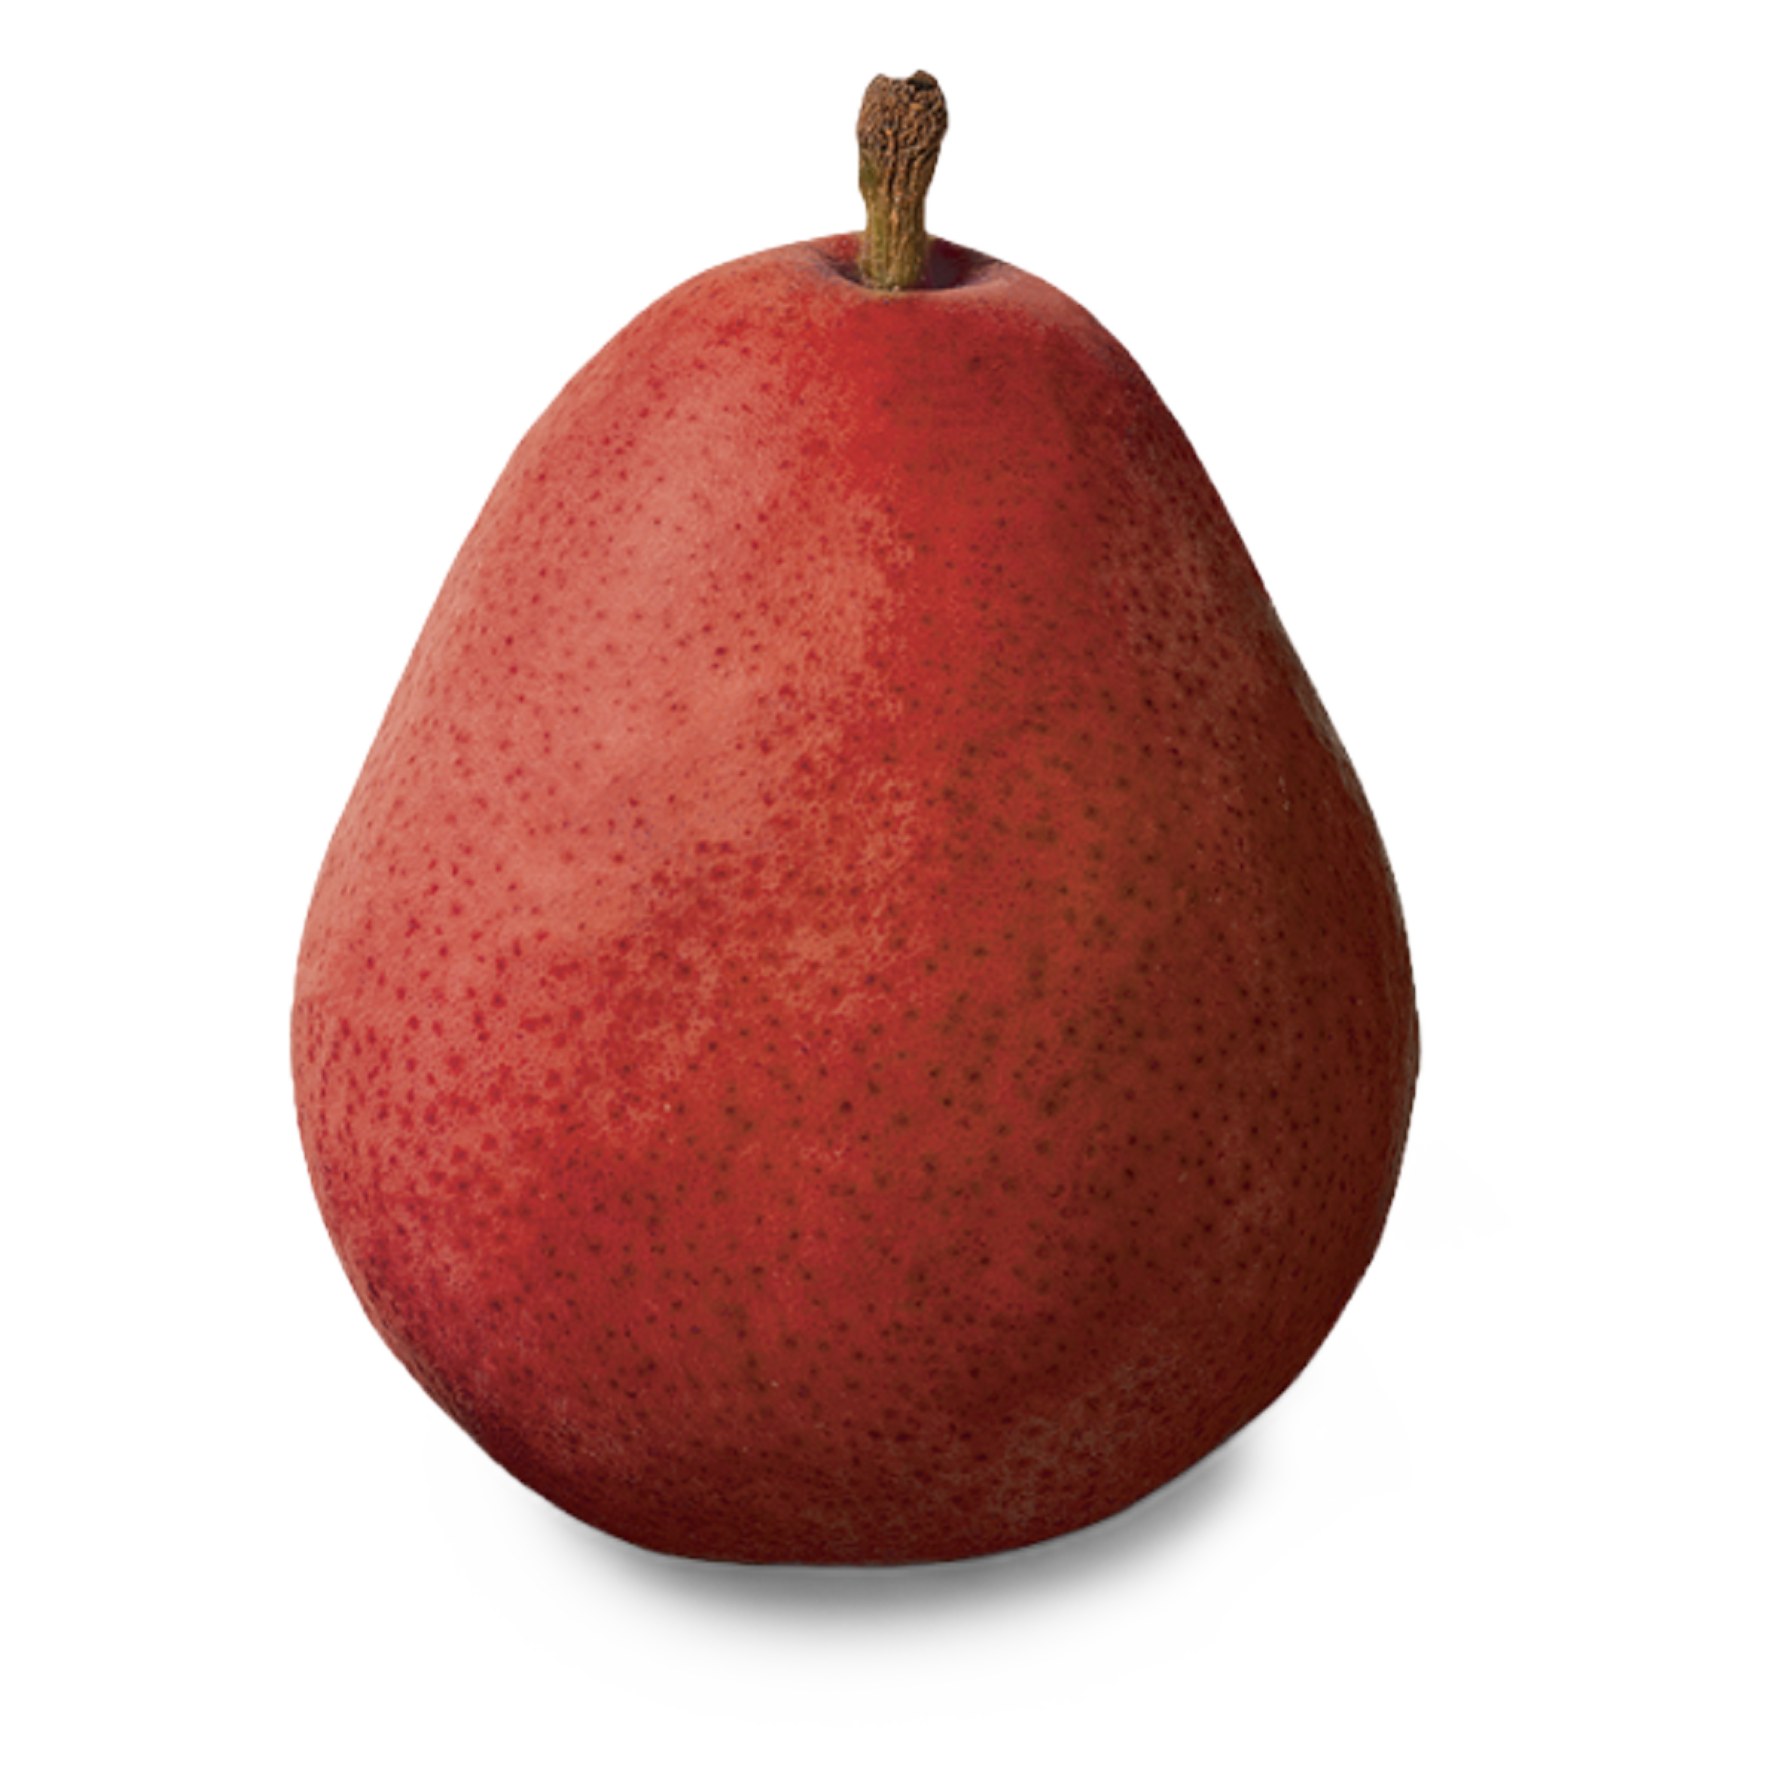 Organic Red D'anjou Pear - 1ct